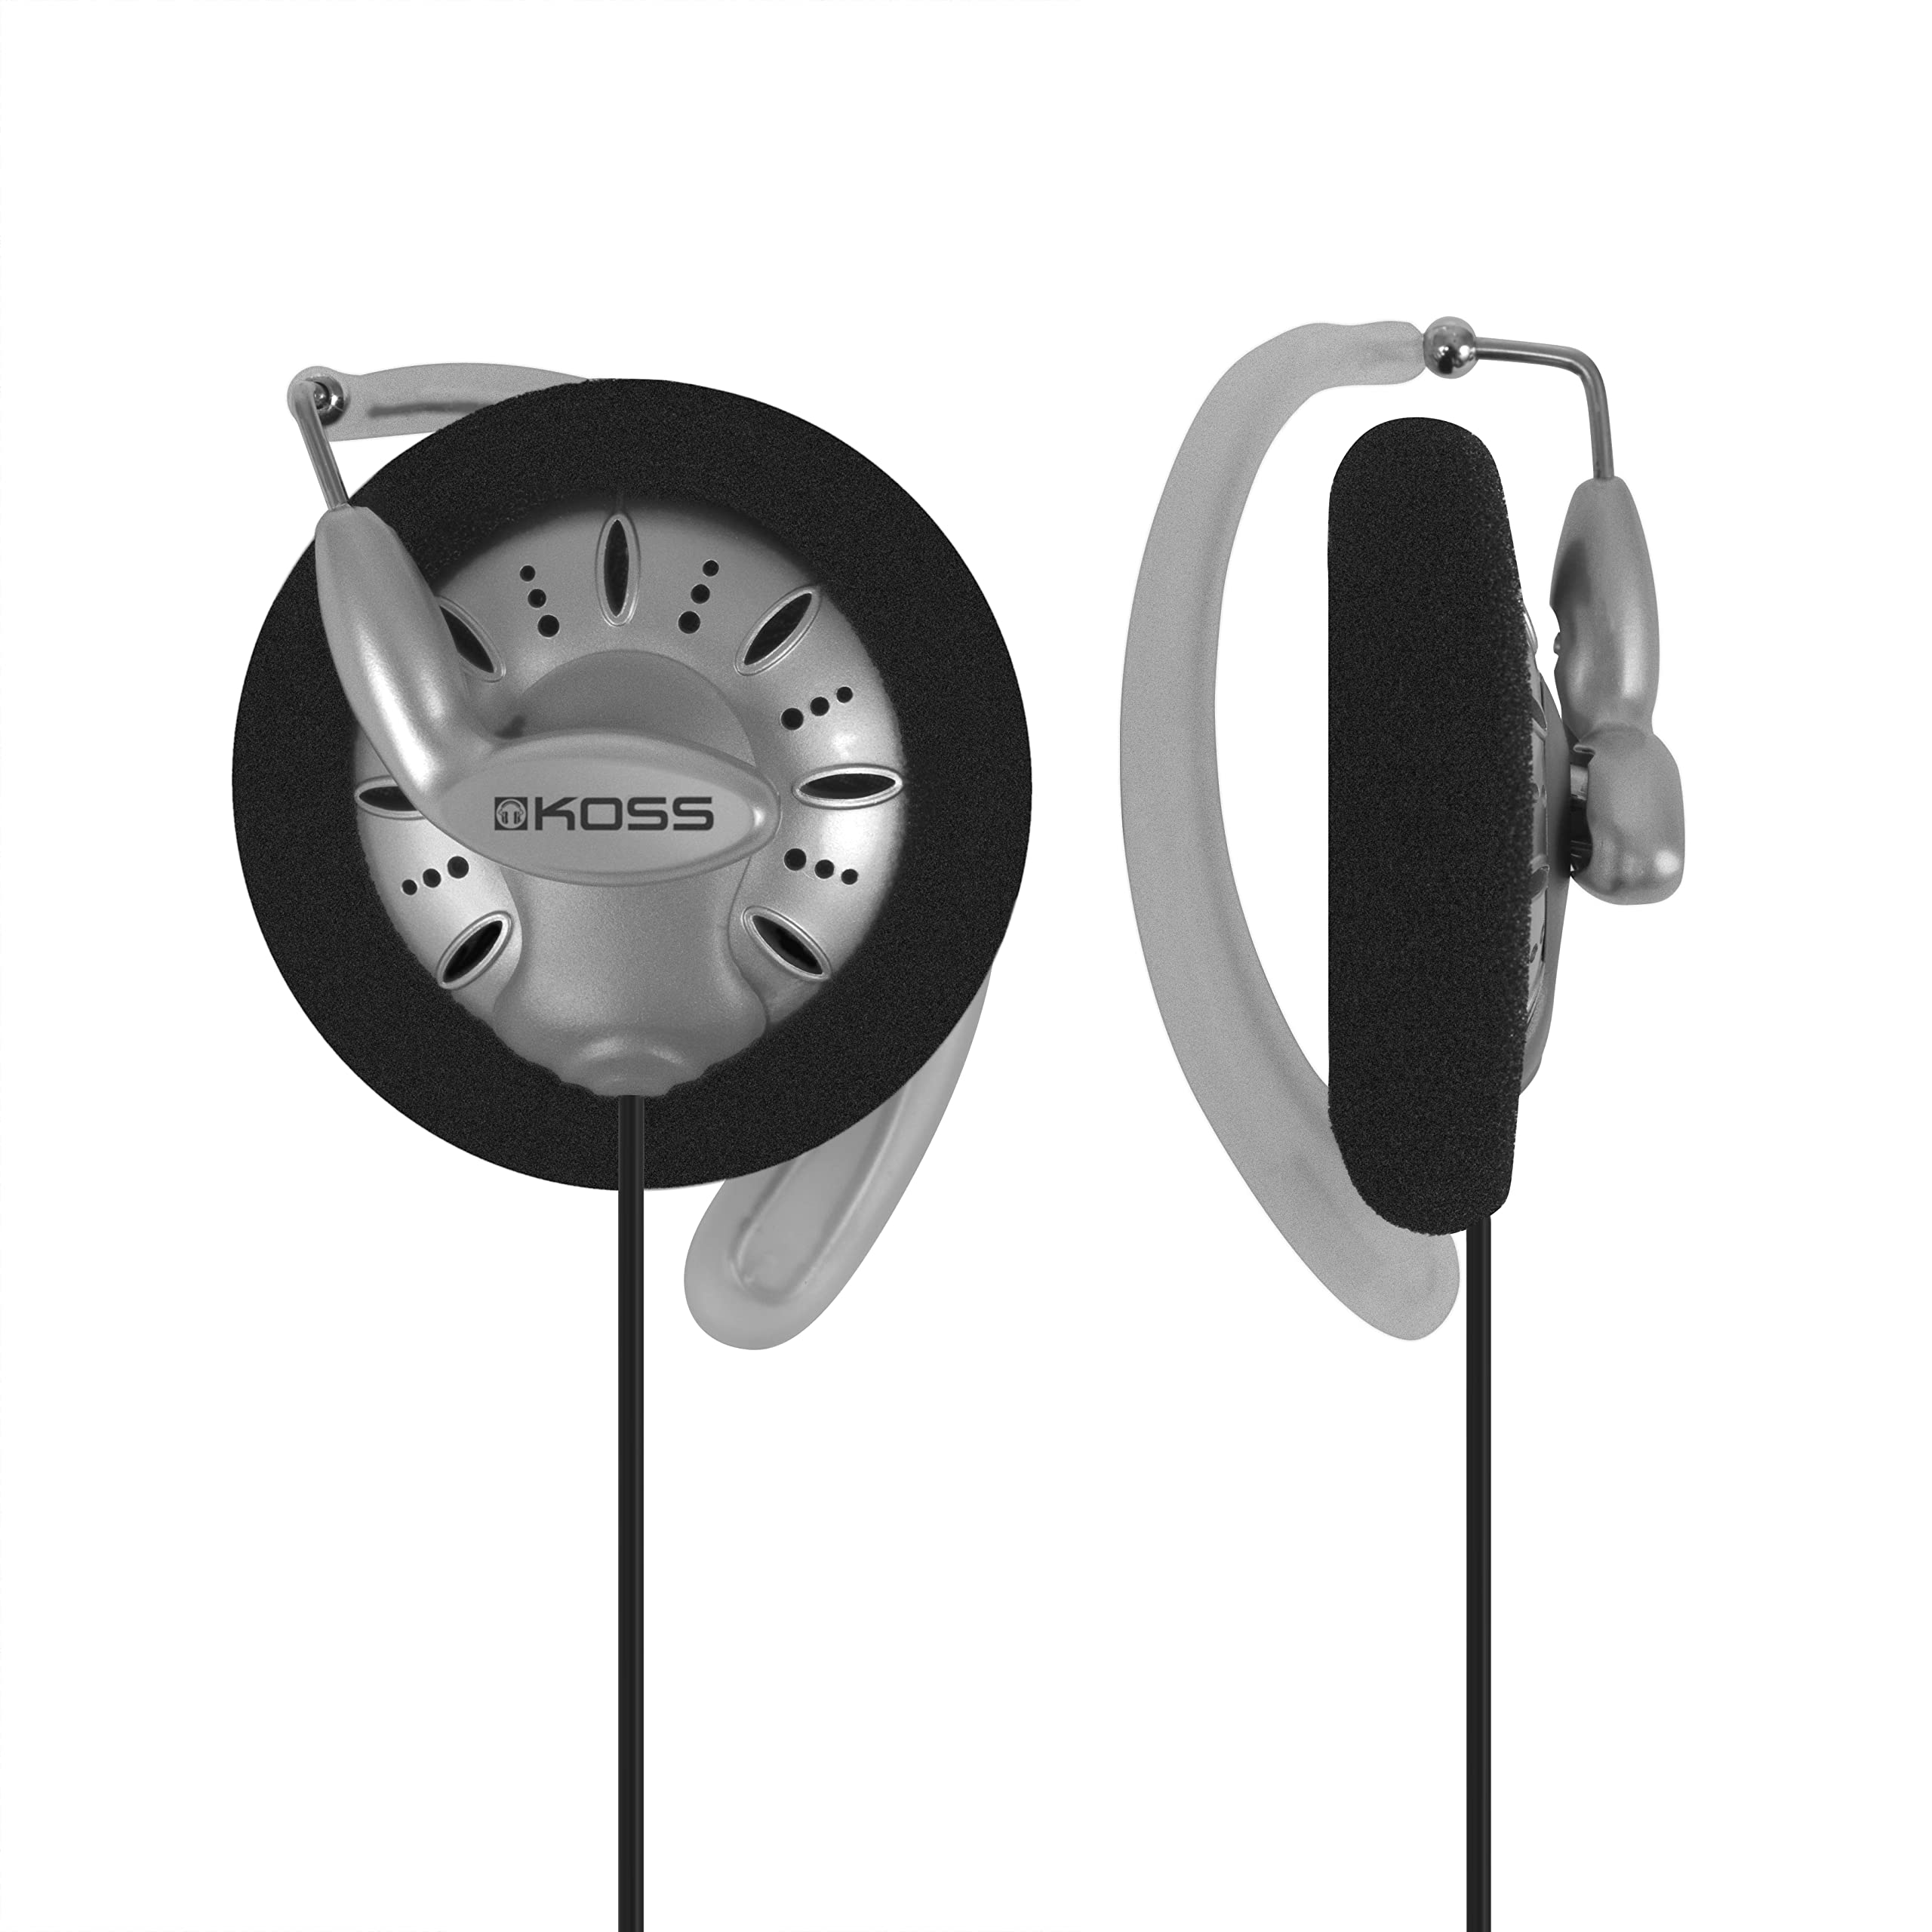 Koss KSC75 Portable On-Ear Clip Headphones $15.99